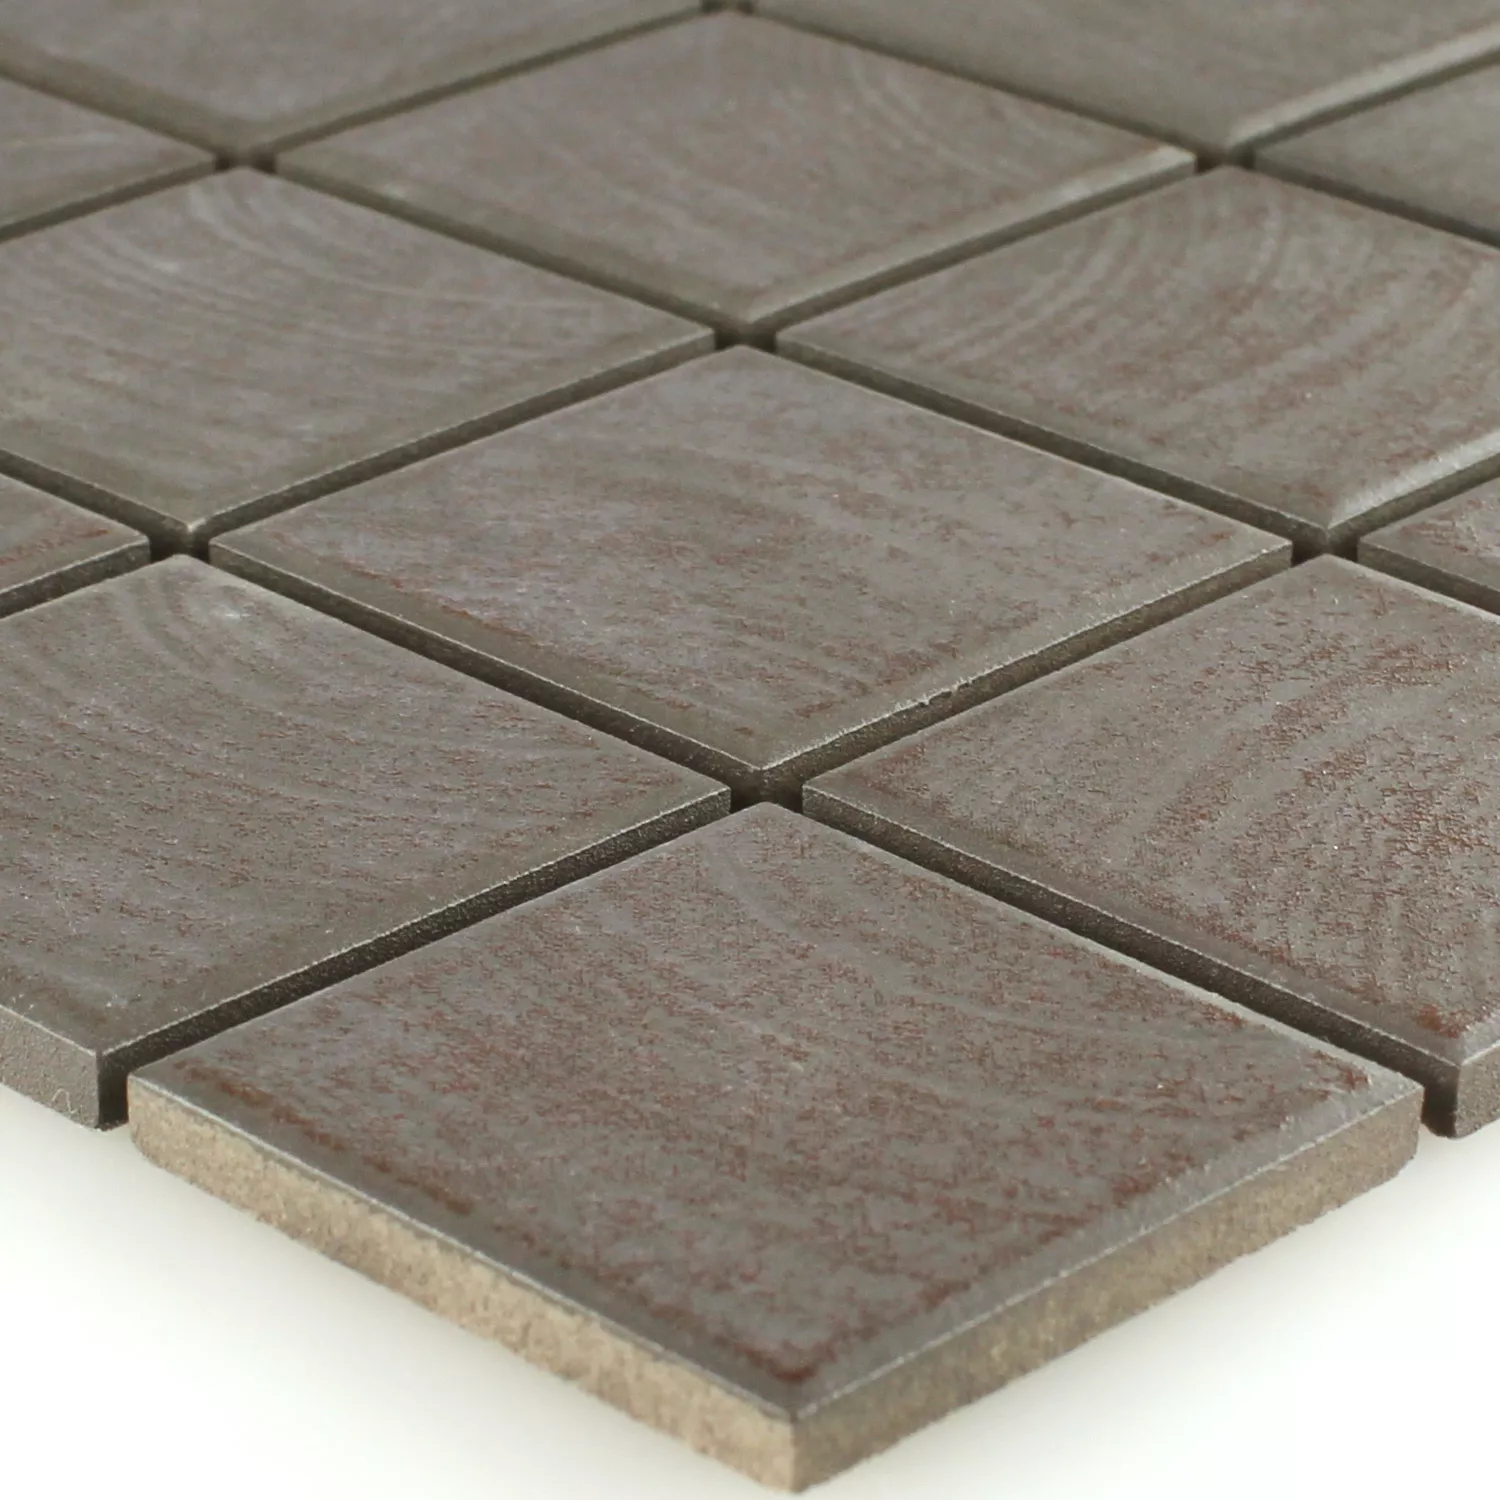 Sample Mosaic Tiles Ceramic Non Slip Brown Structured